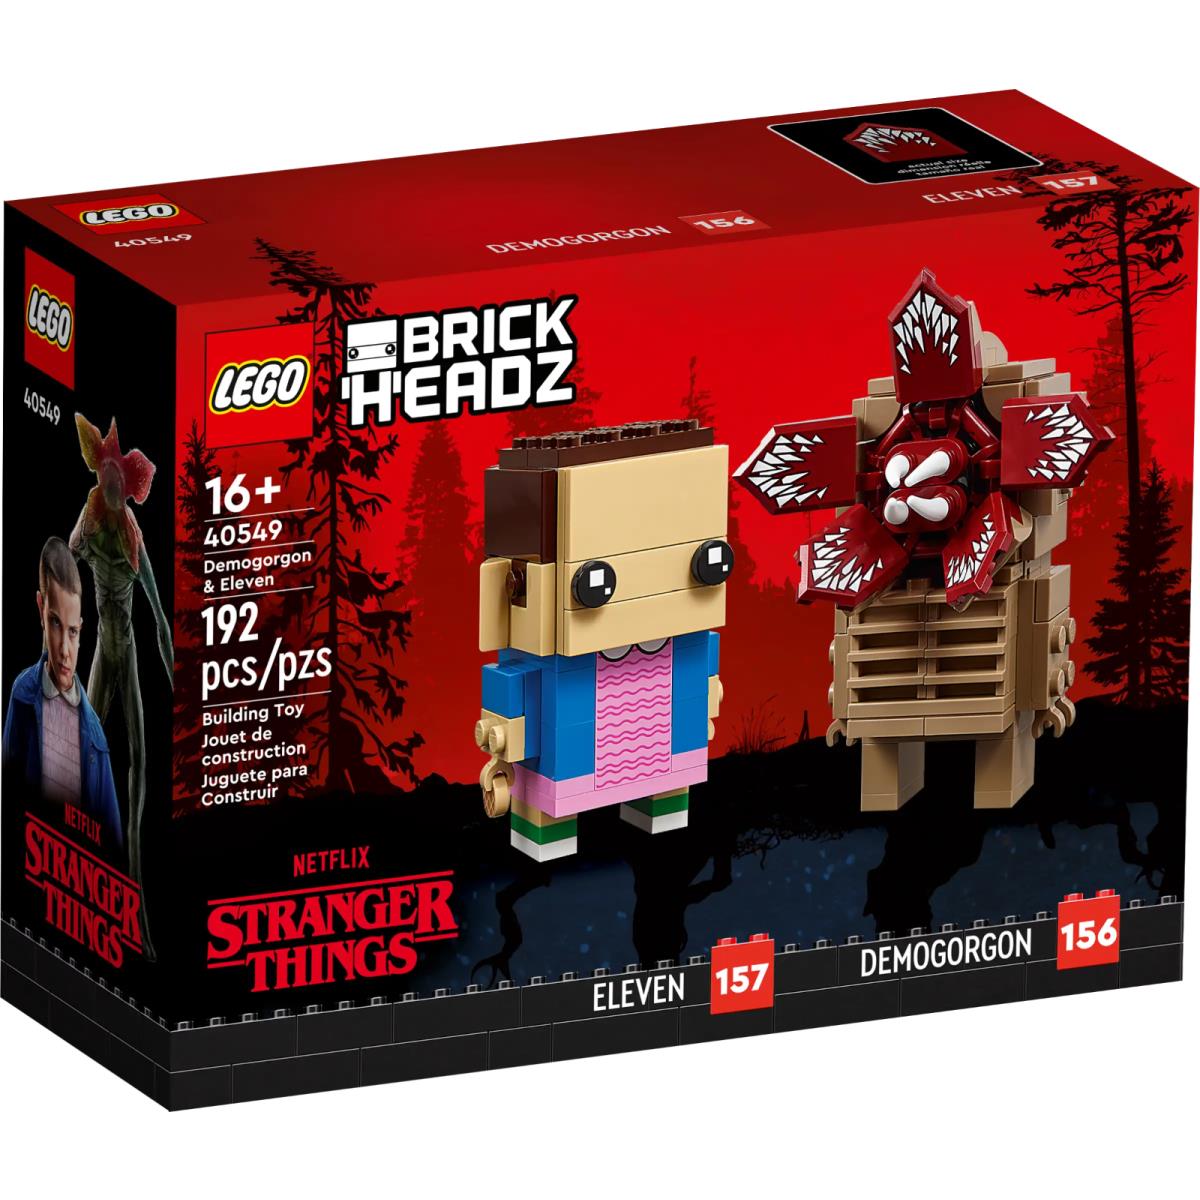 Lego Brickheadz Demogorgon Eleven Stranger Things 157 and 156